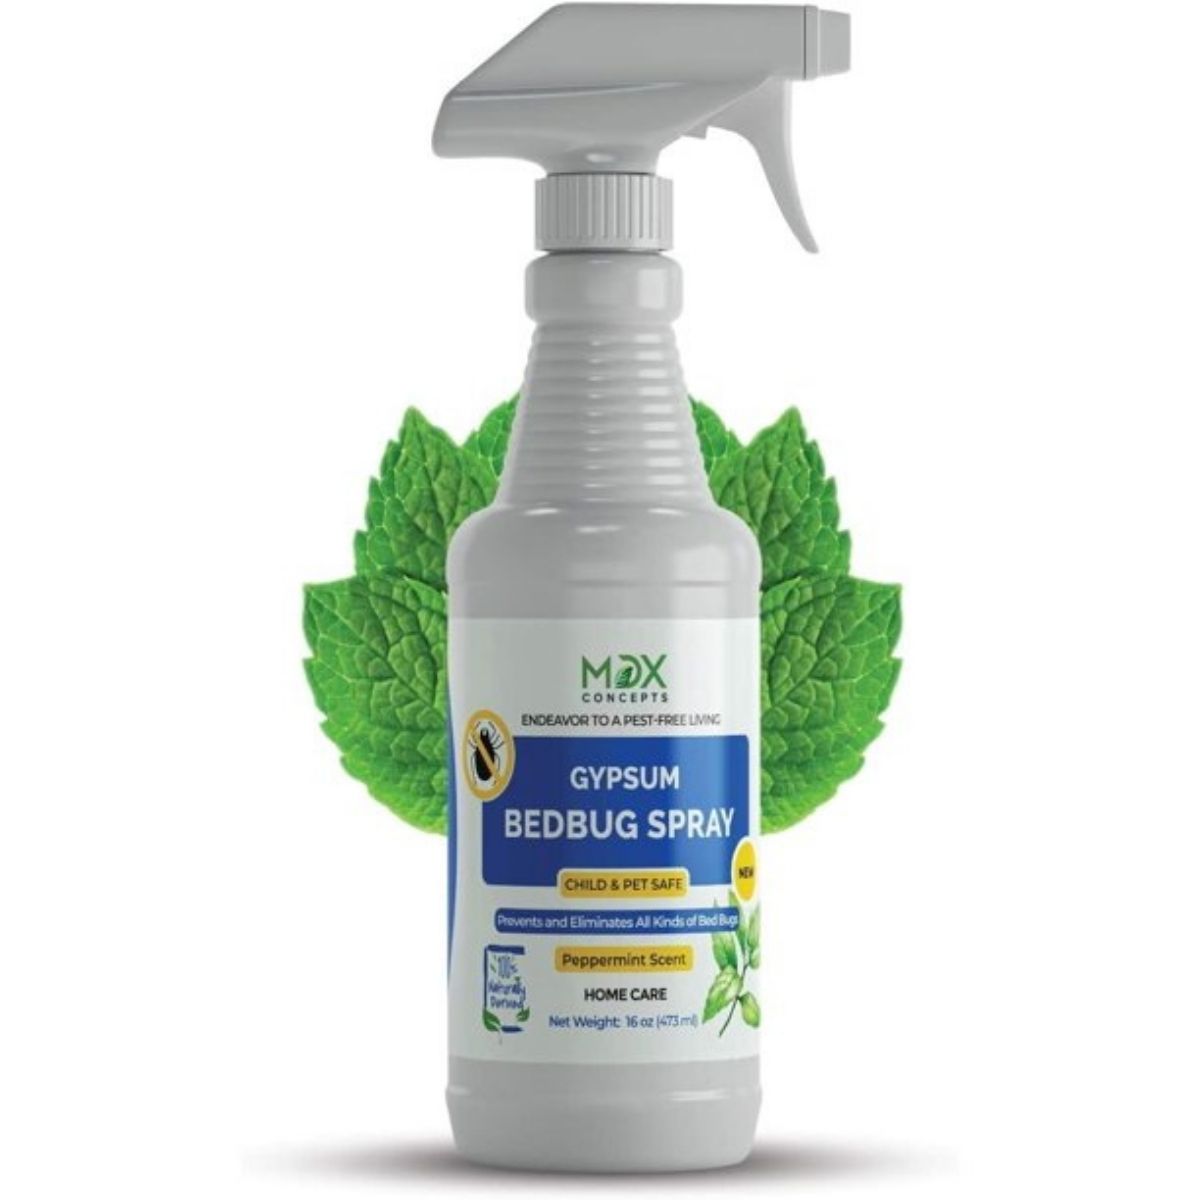 MDXconcepts Gypsum Bedbug Spray